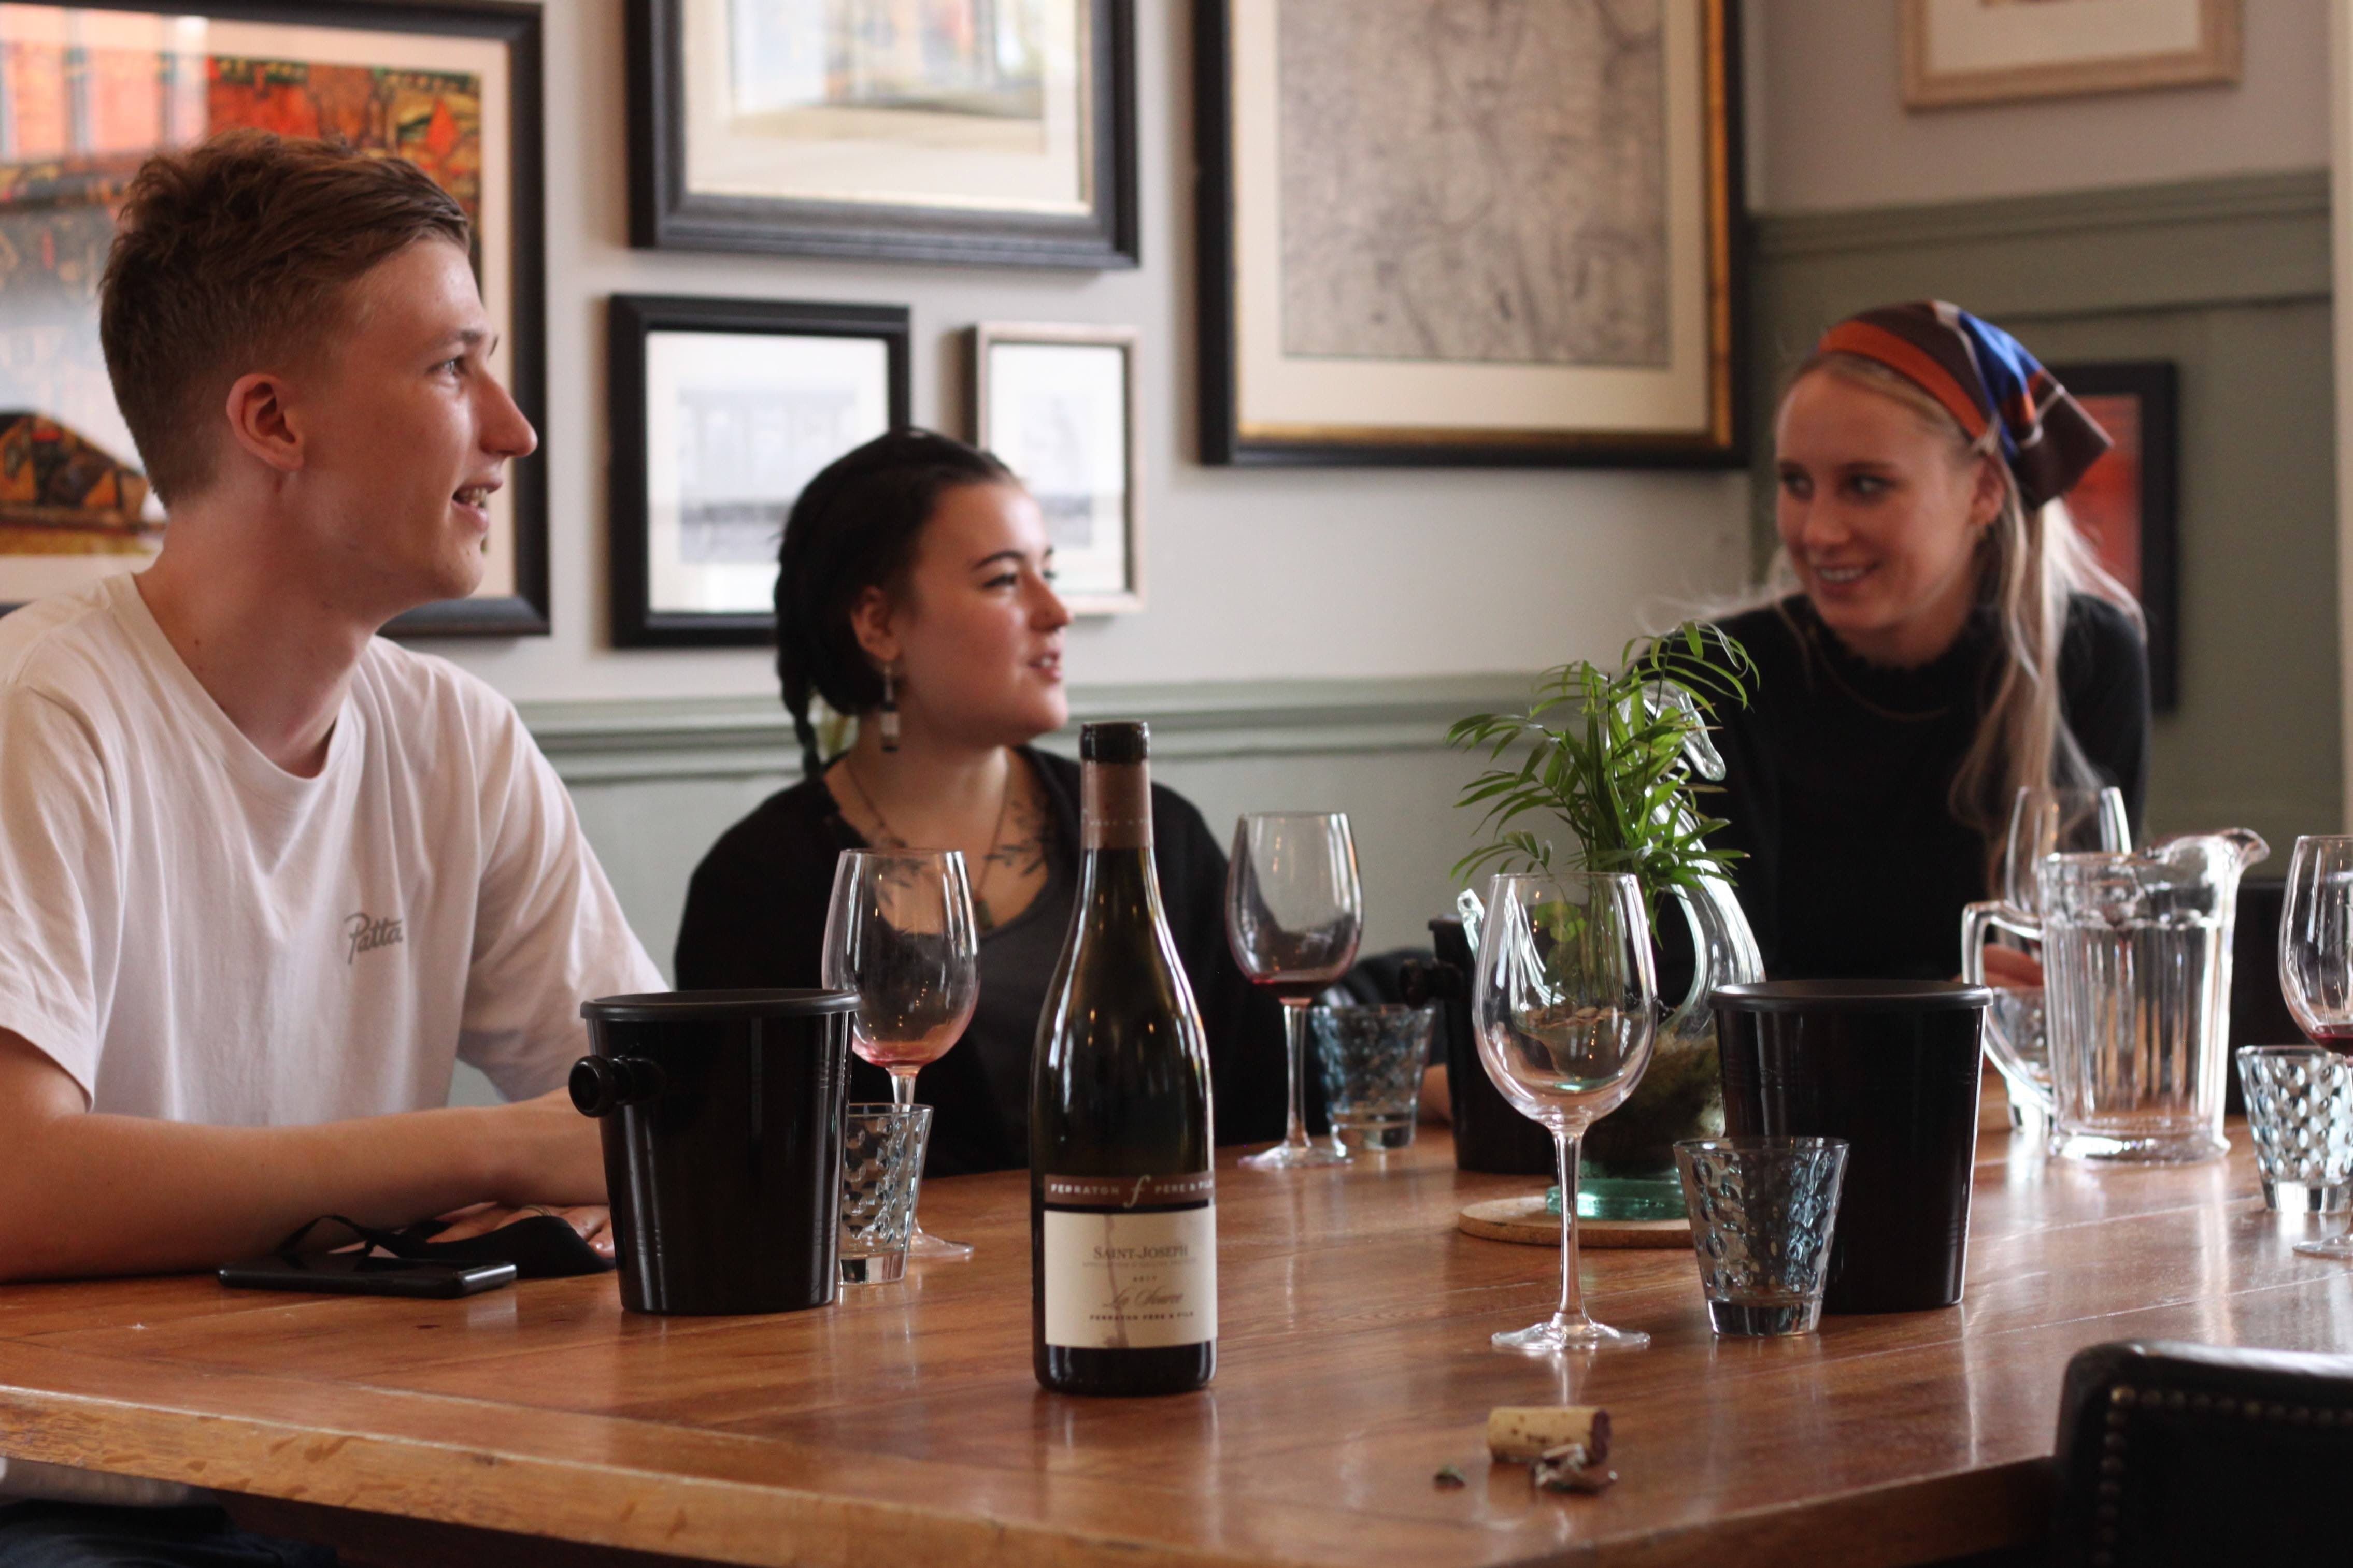 How Veraison hopes wine training can help next hospitality generation